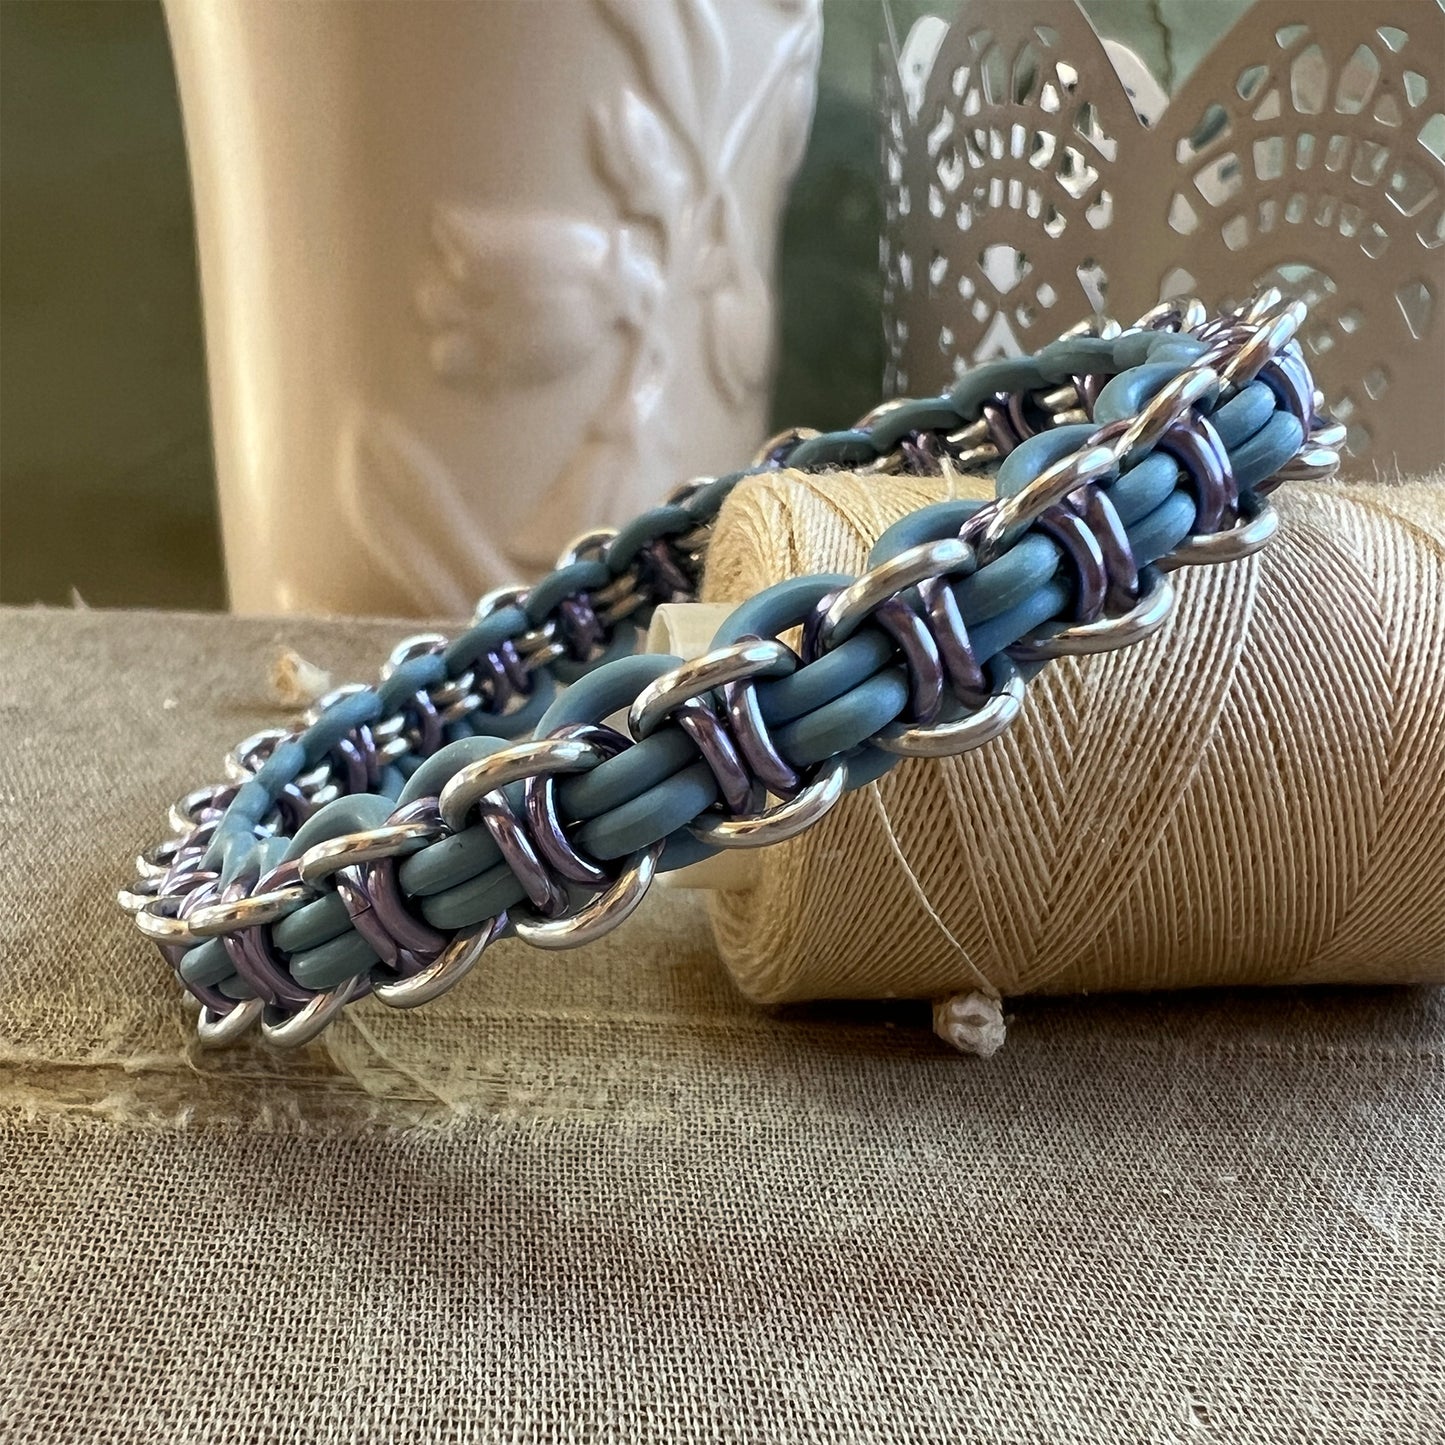 Hoodoo Stretch Bracelet Kit with FREE video - Powder Blue, Lavender & Silver